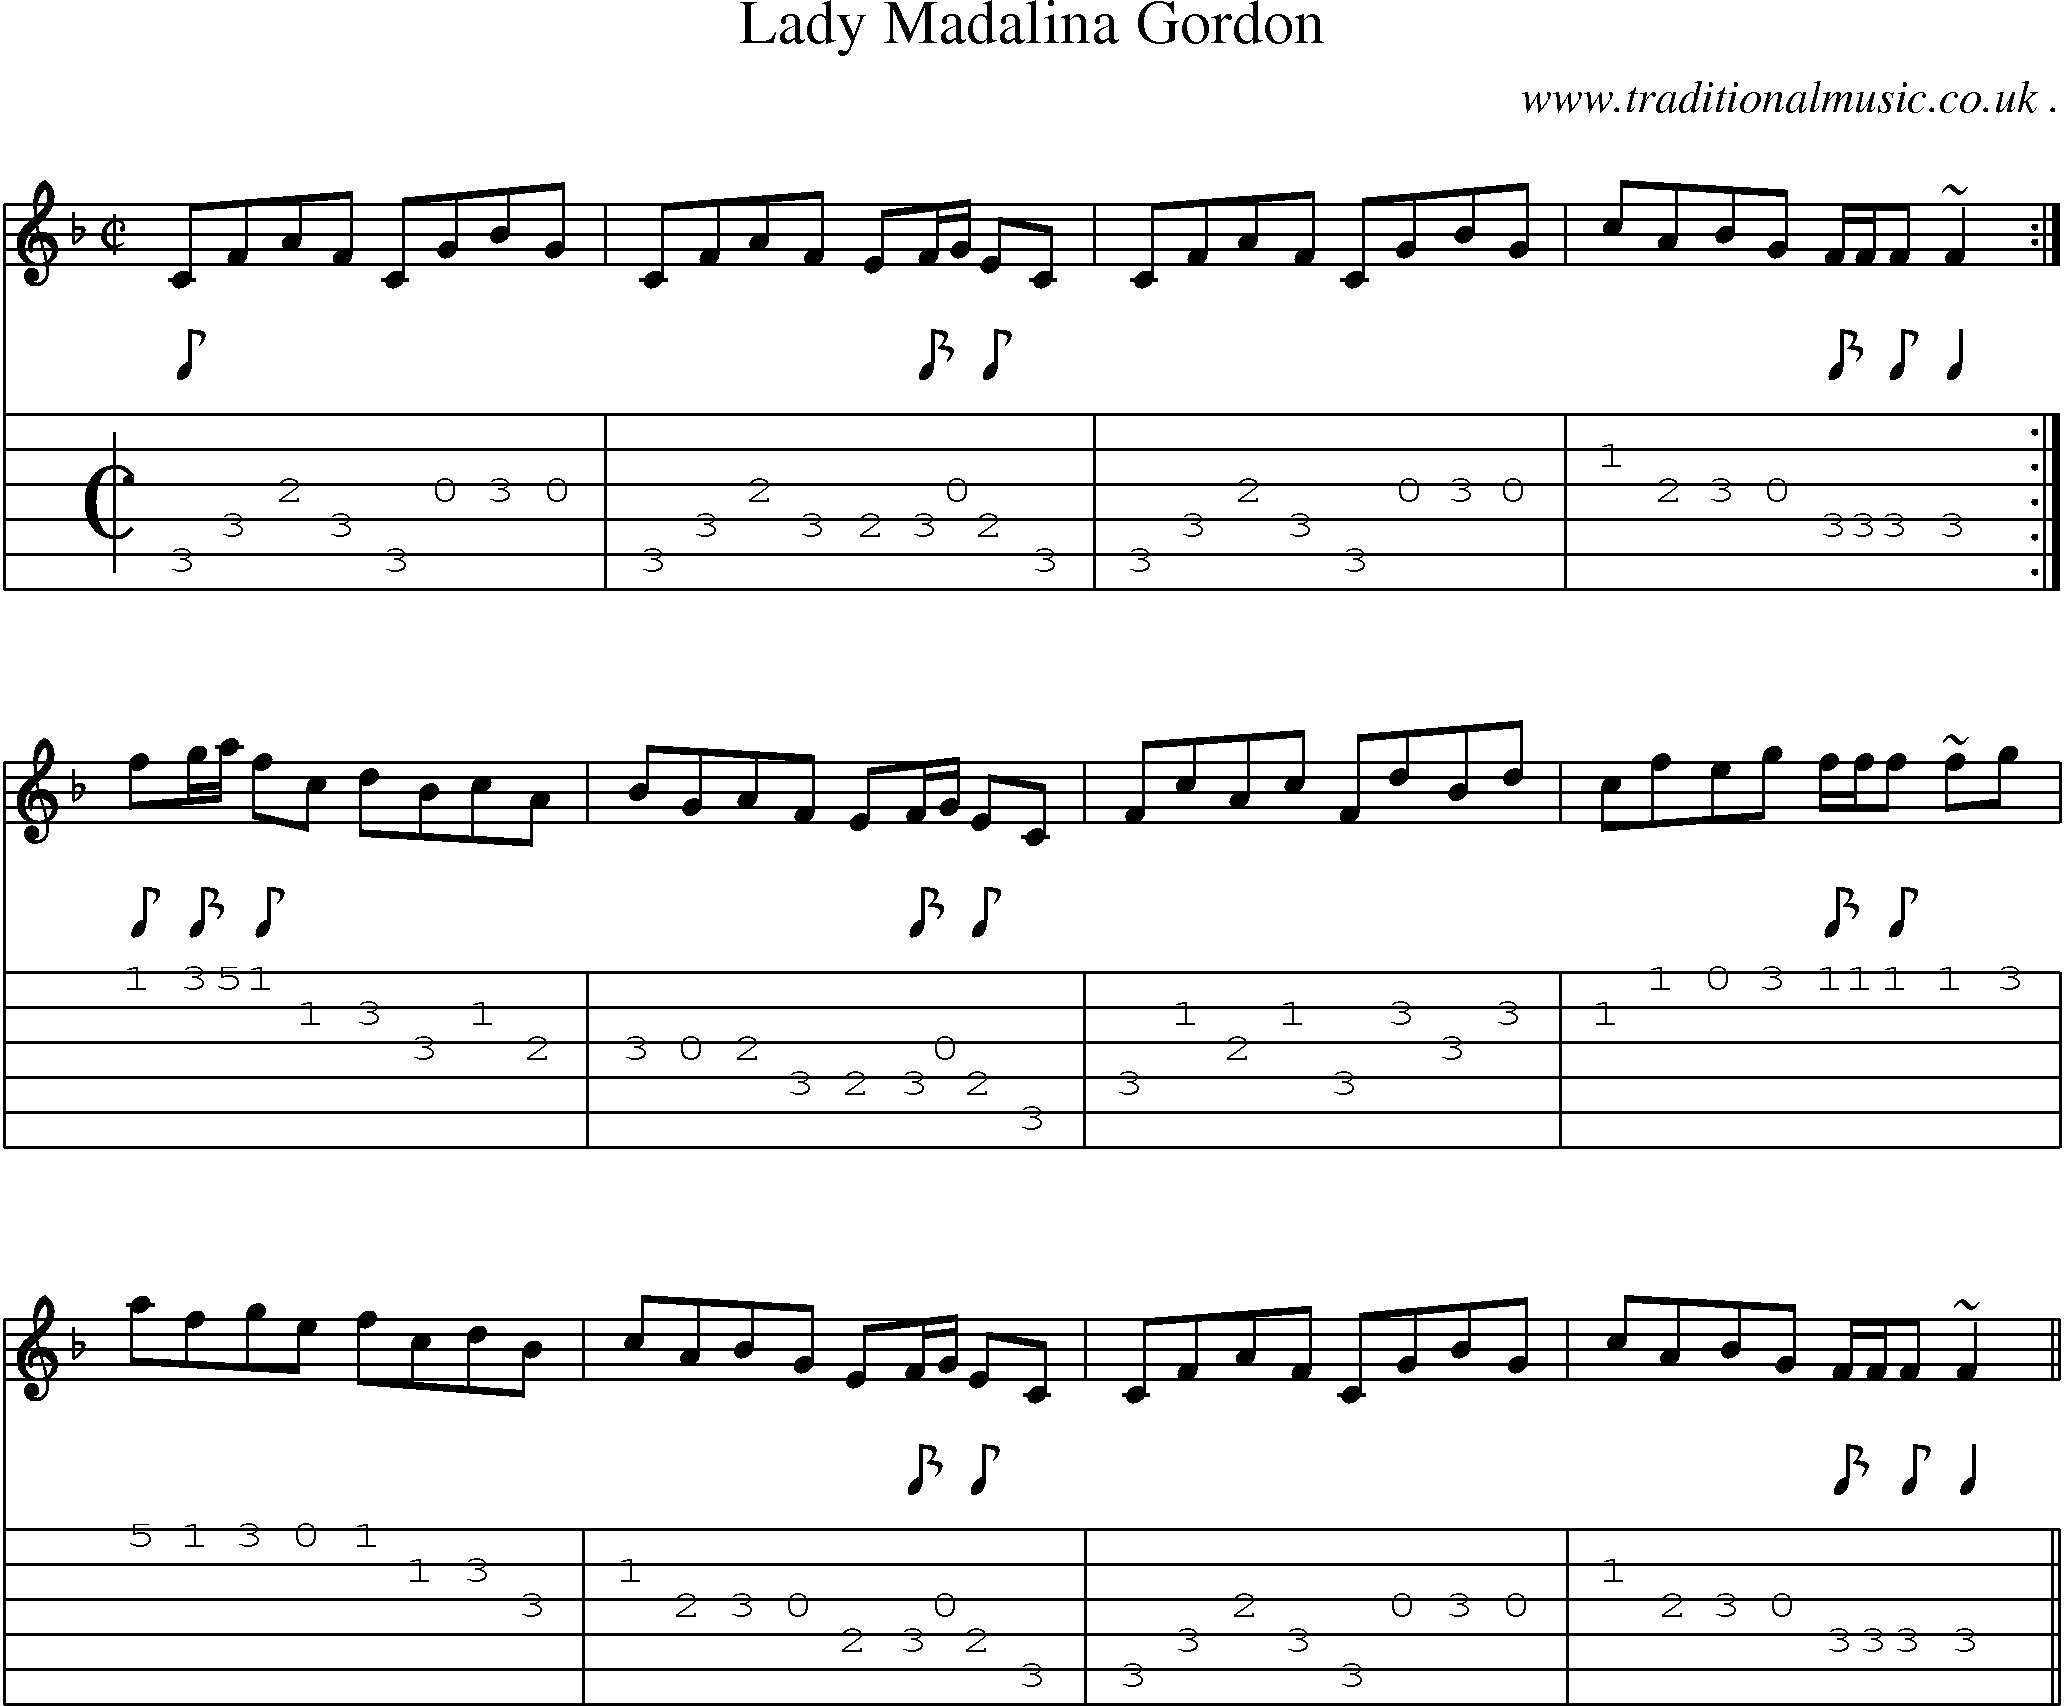 Sheet-music  score, Chords and Guitar Tabs for Lady Madalina Gordon